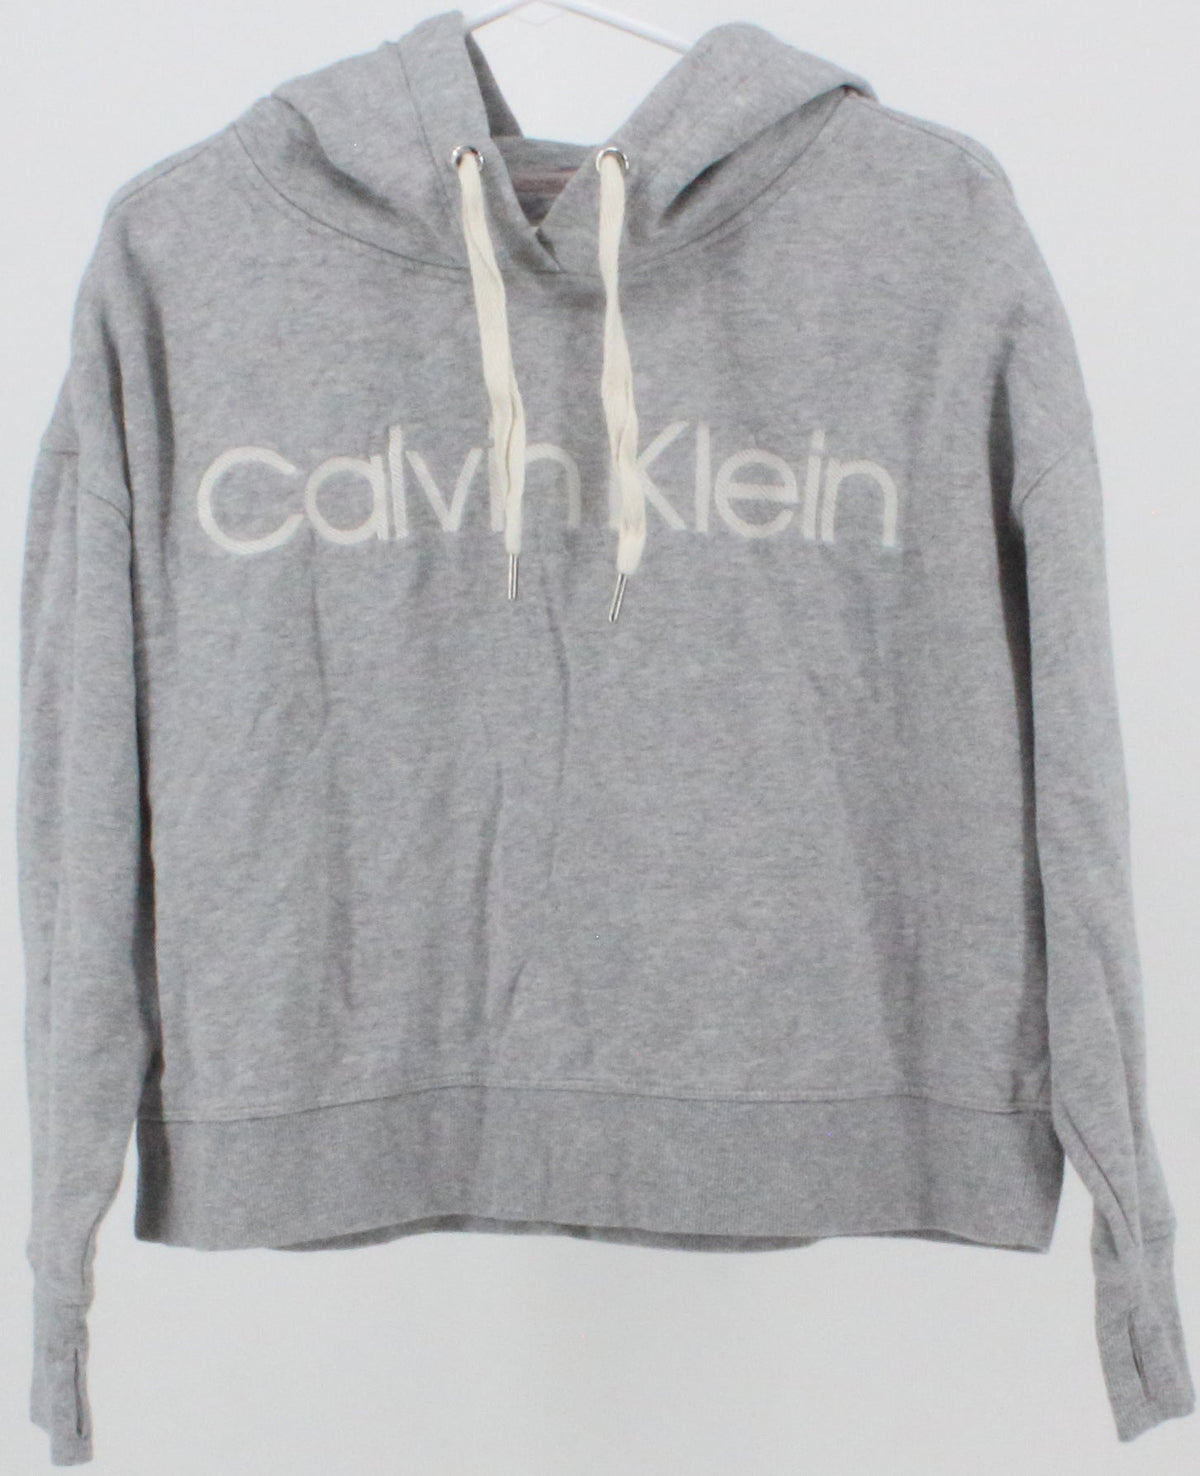 Calvin Klein Performance Grey Cropped Hooded Sweatshirt